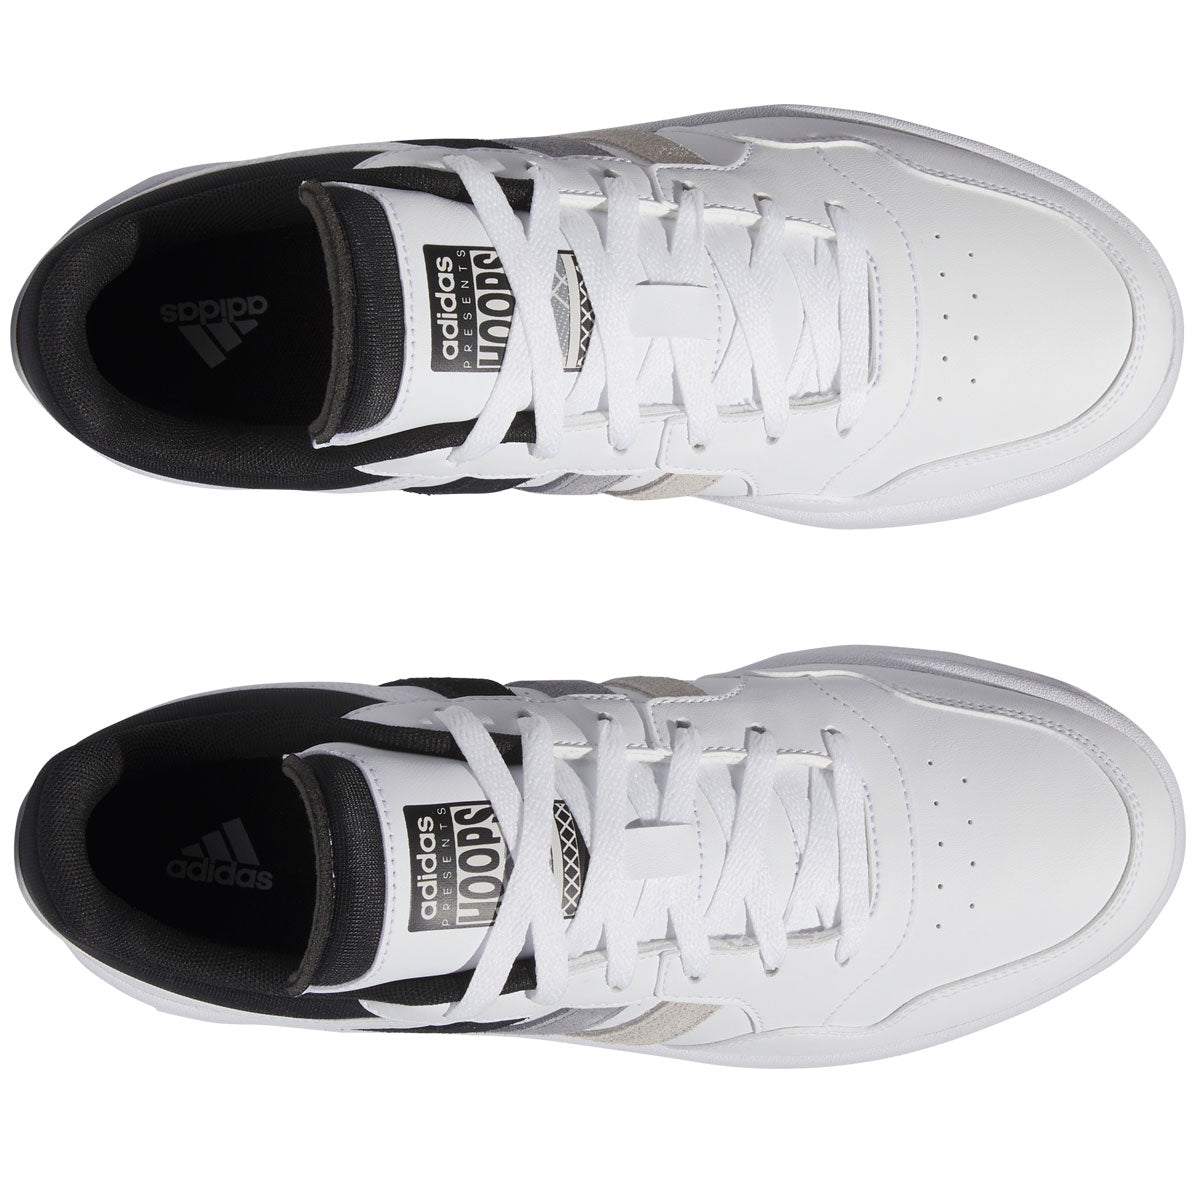 adidas Hoops 3.0 Trainers - Mens - White/Black/Grey